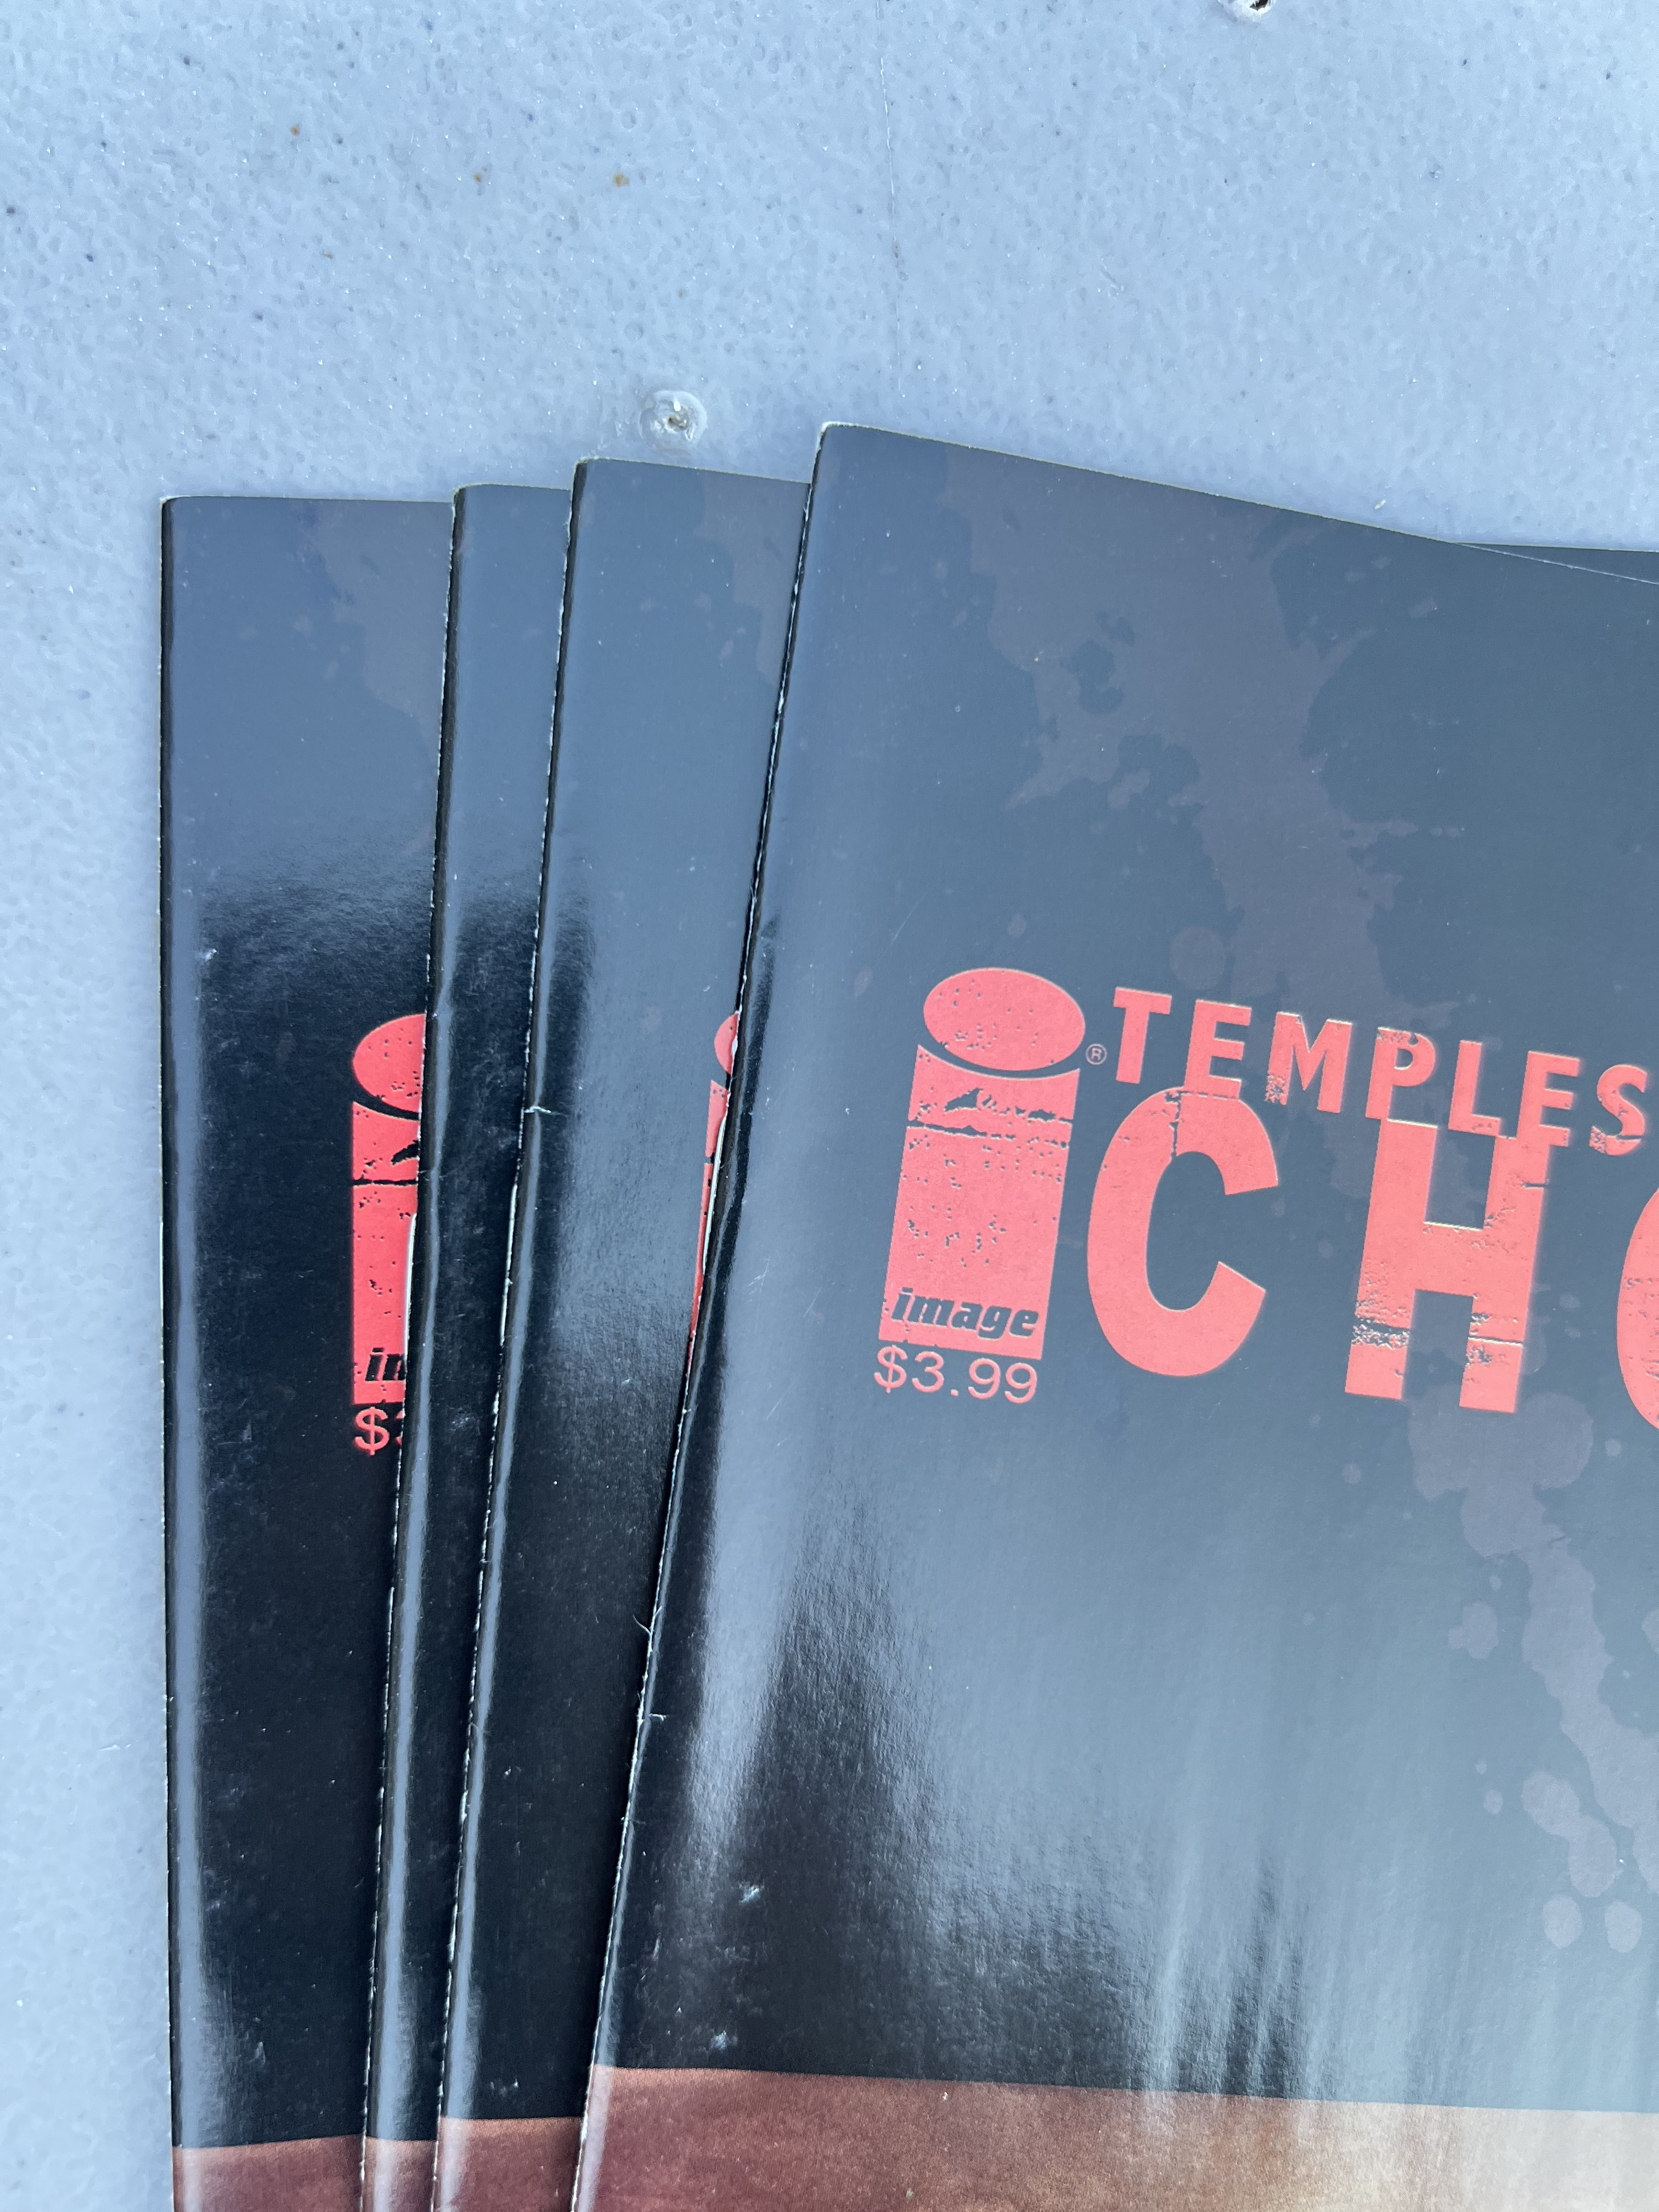 COMIC BOOK TEMPLESMITH MCCOOL CHOKER HOAX HUNTERS EPIC KILL LOT 17 NEW